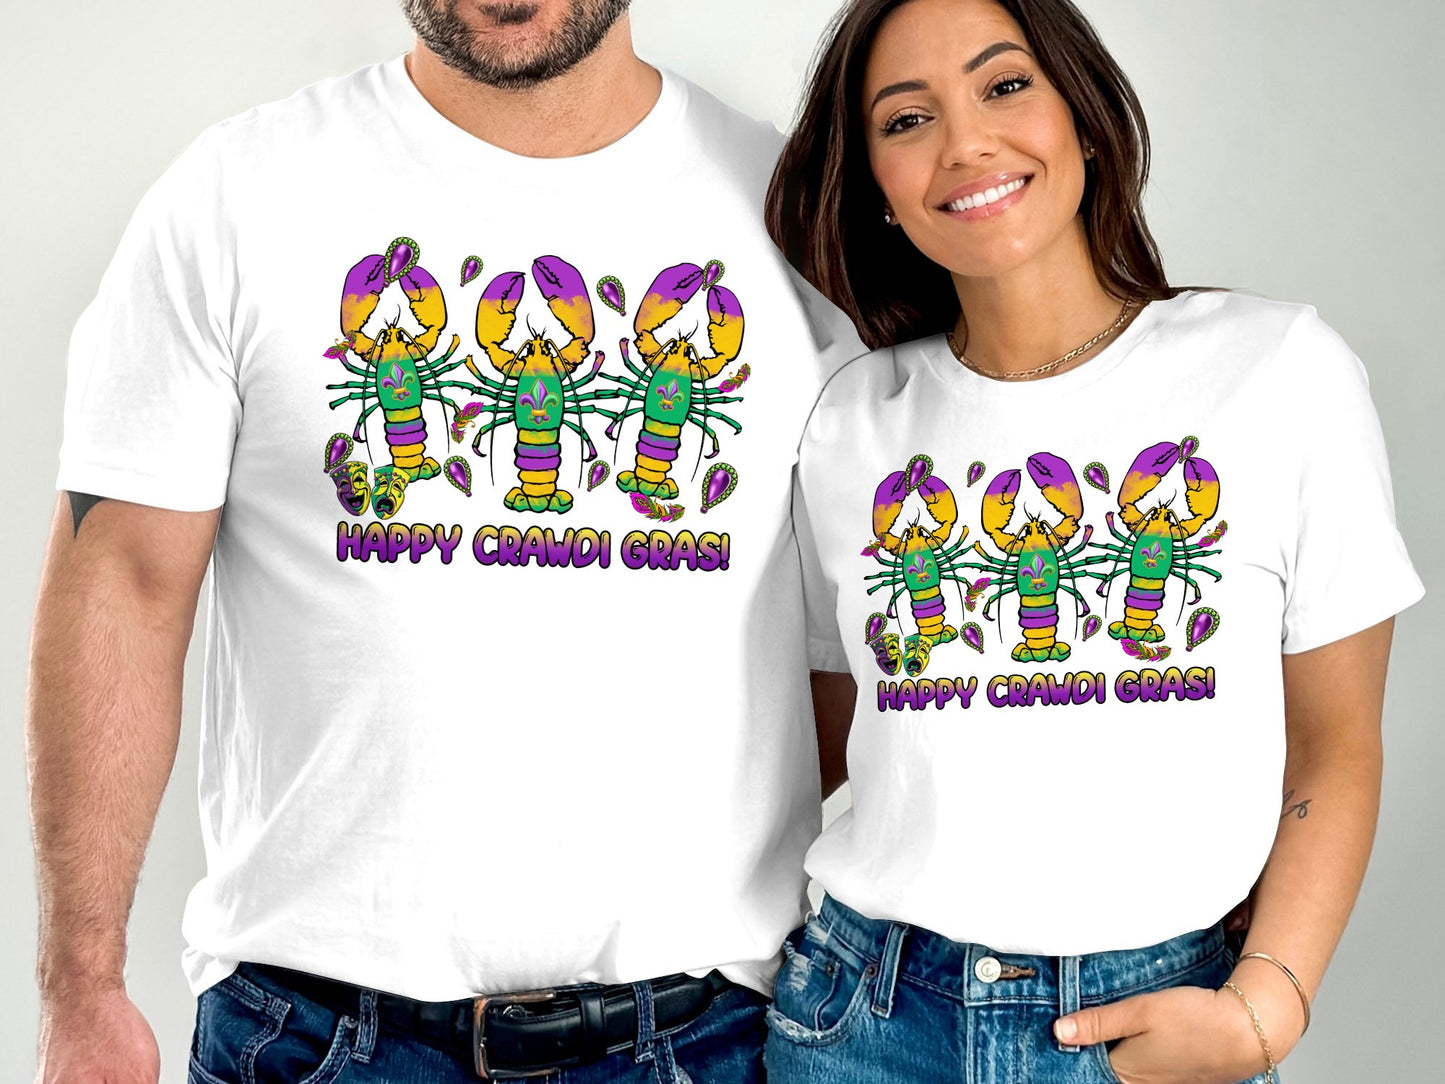 Happy Crawdi Gras! T-shirt